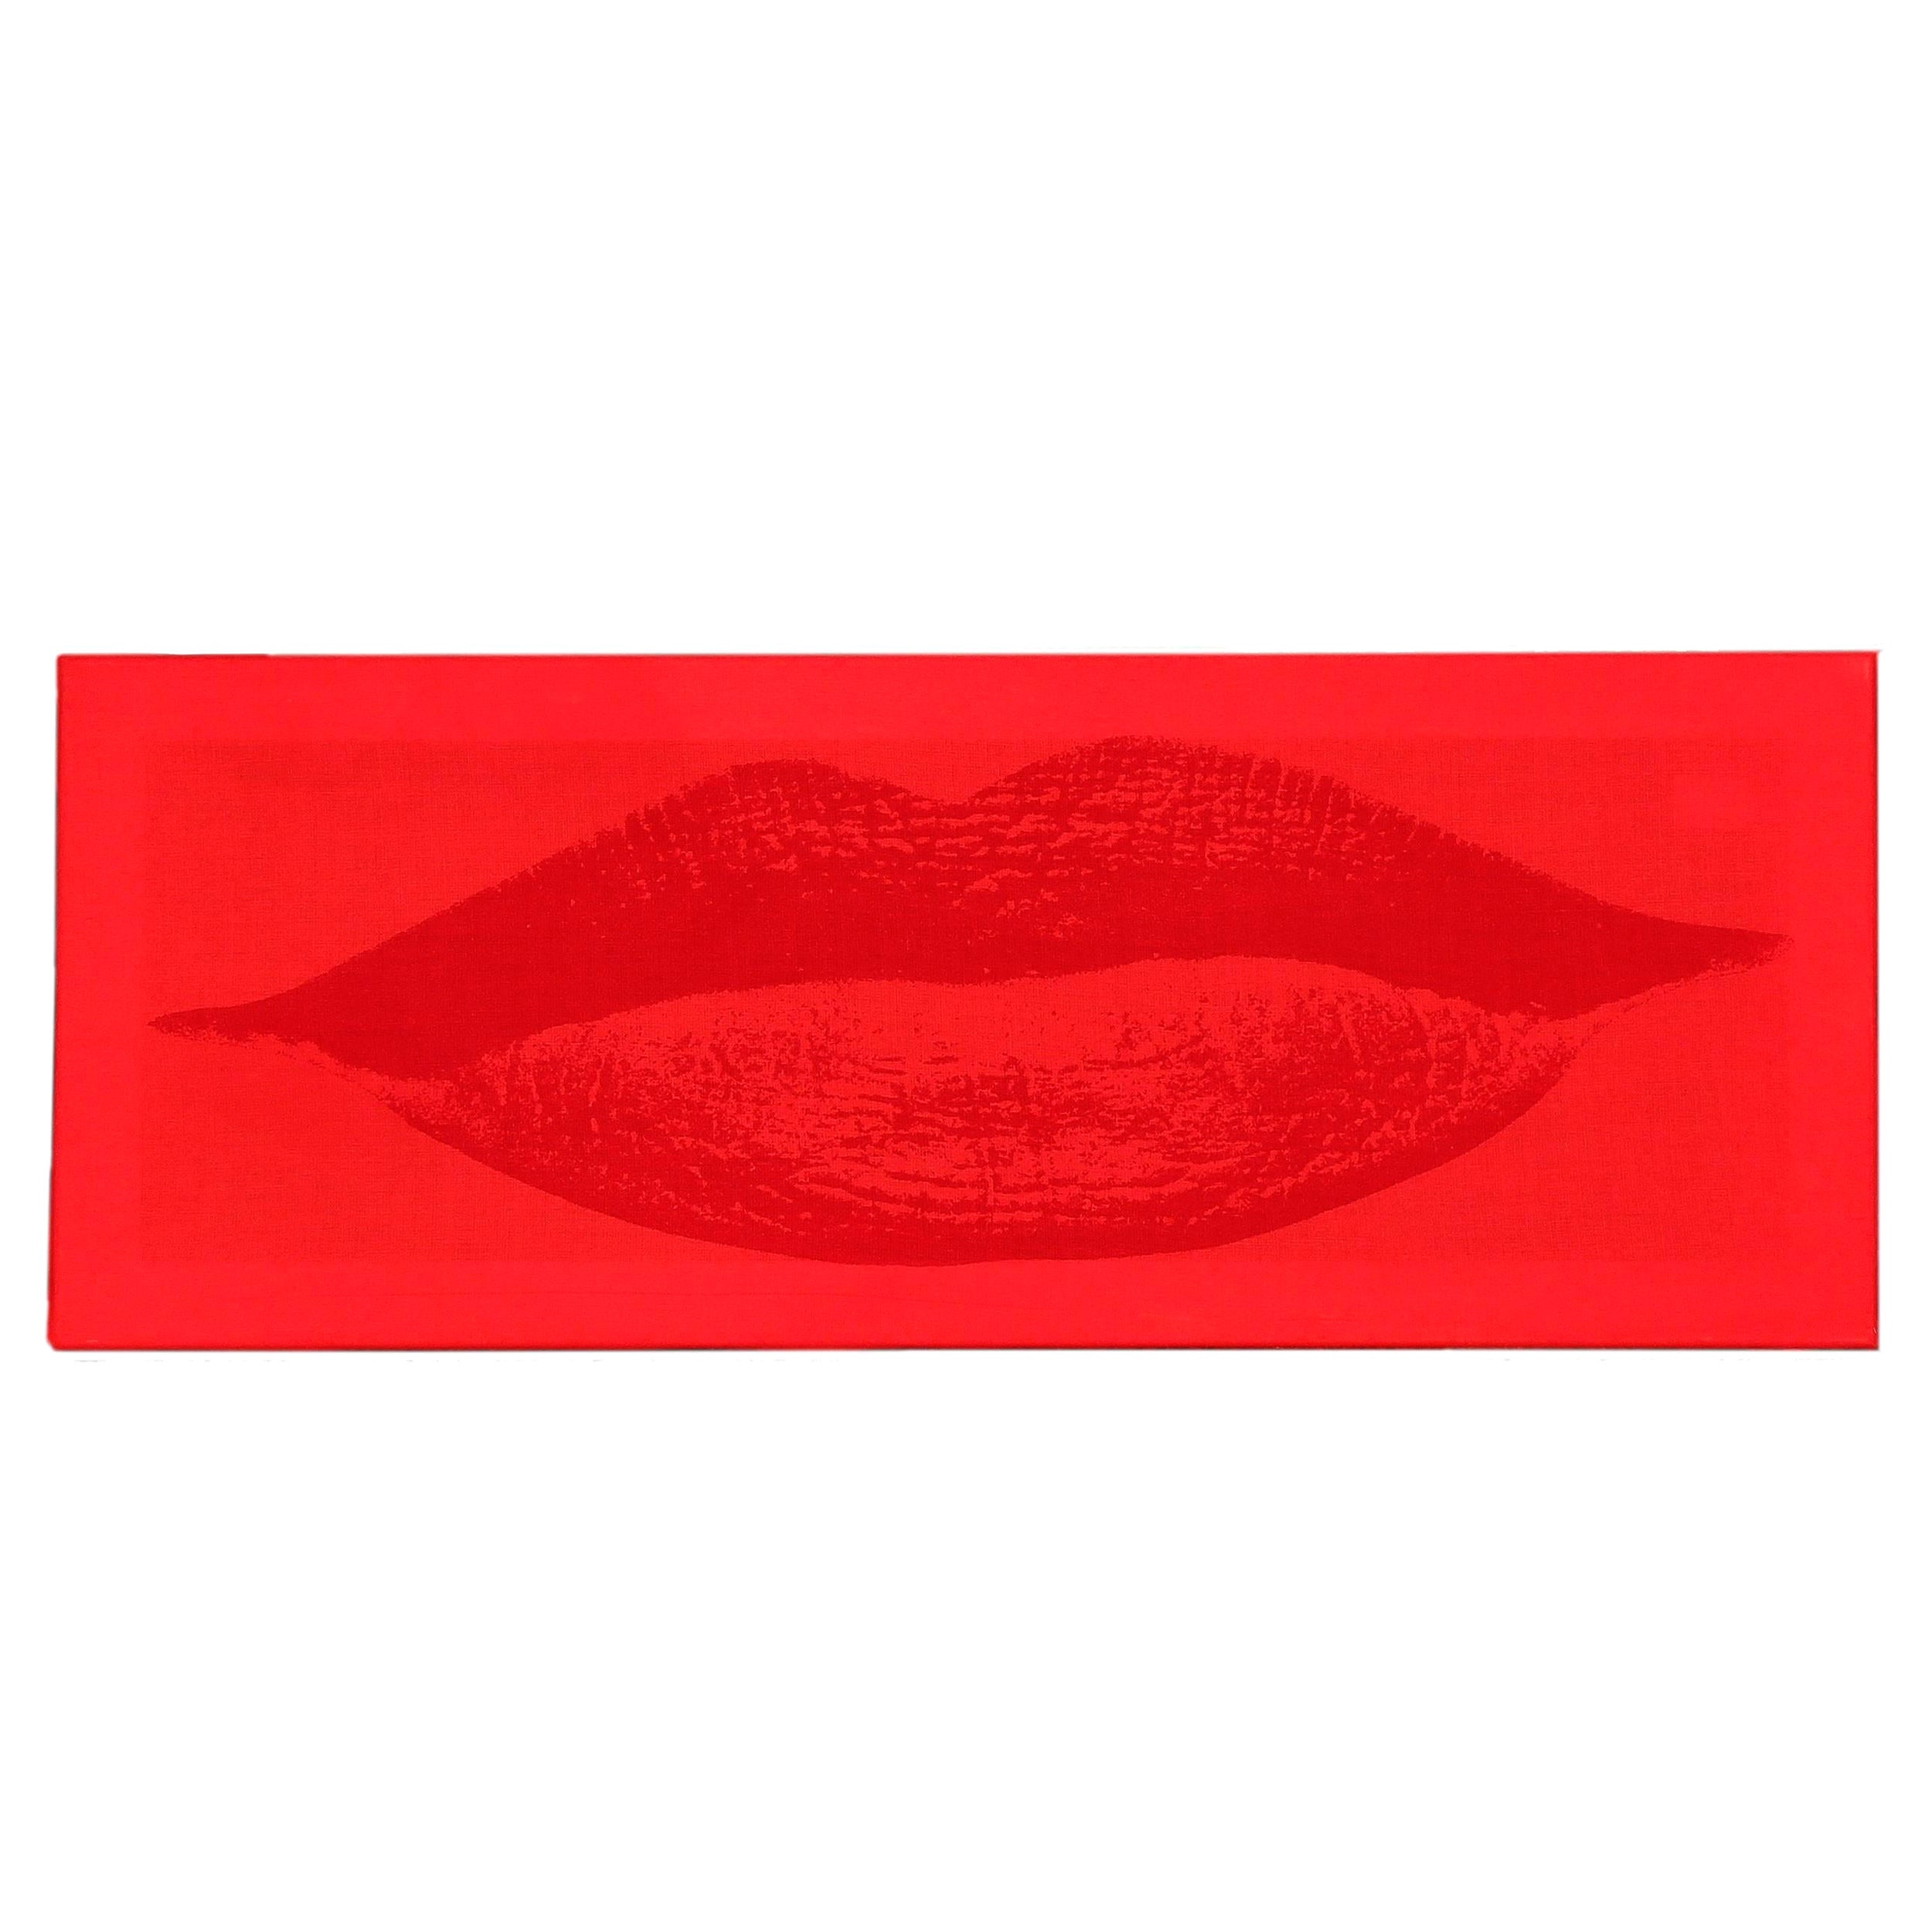 Design Lips by Verner Panton